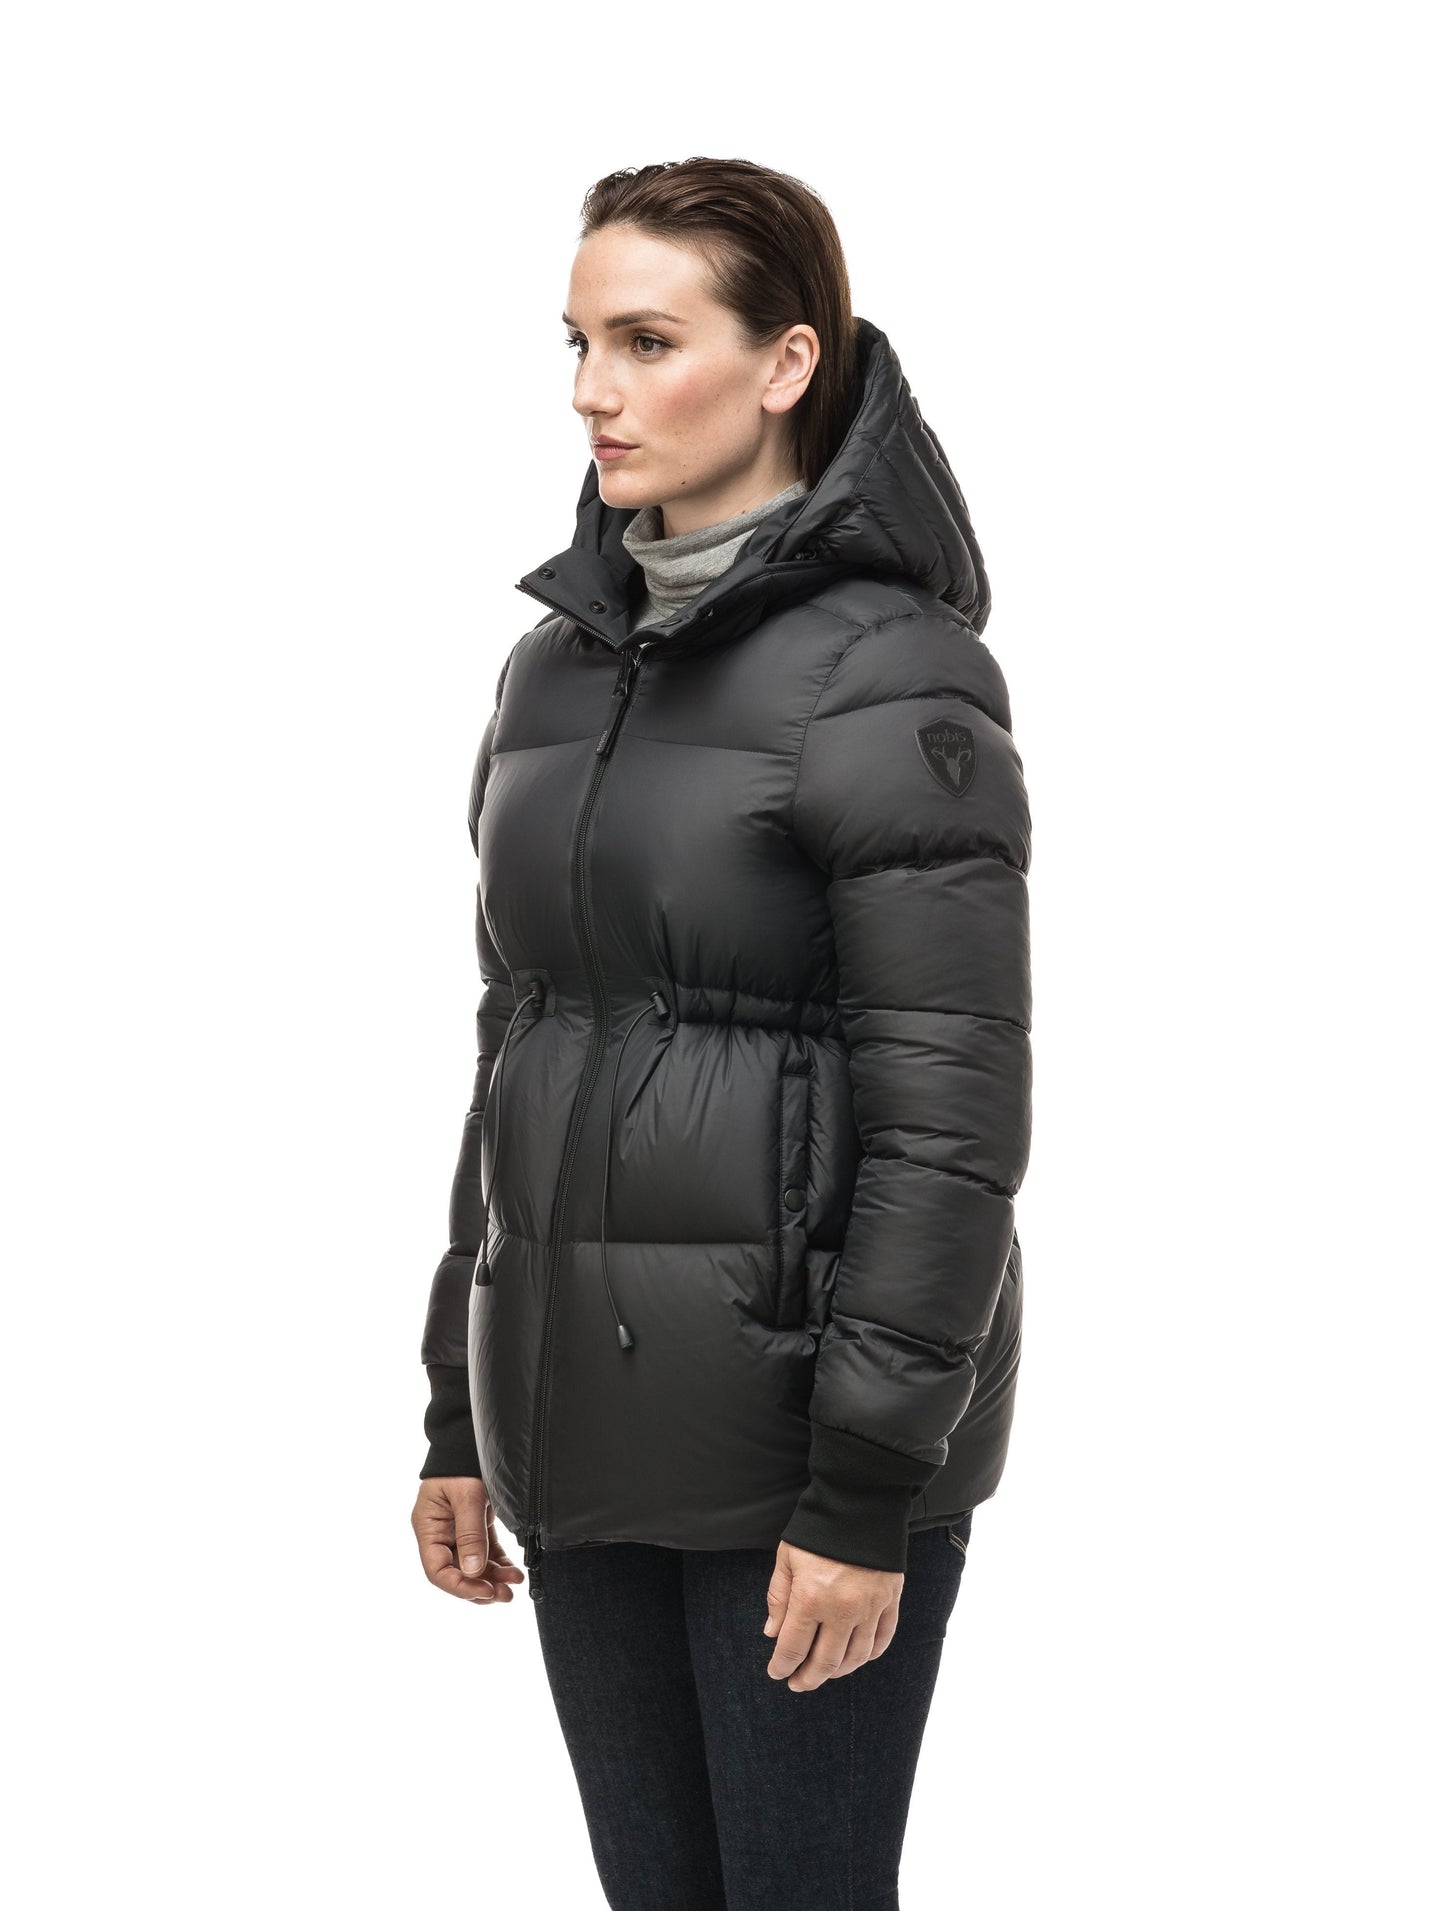 Hip length, reversible women's down filled jacket with waterproof exposed zipper in Black